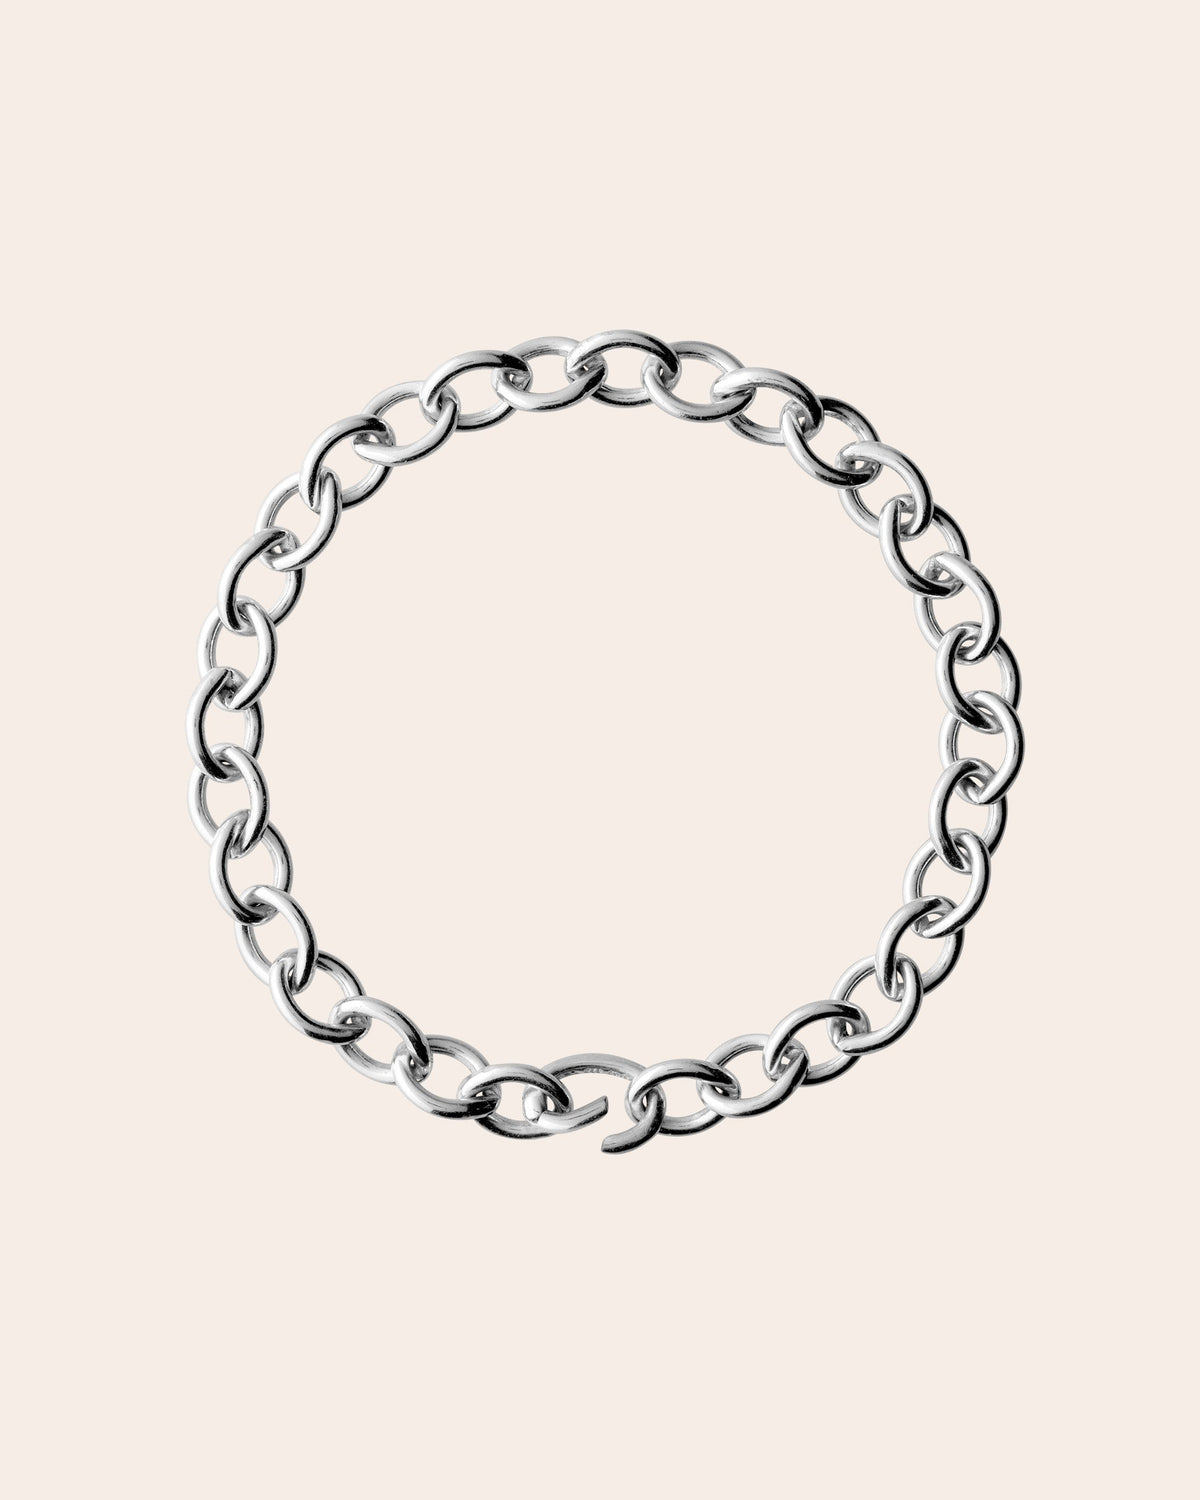 Water Element Chain Bracelet